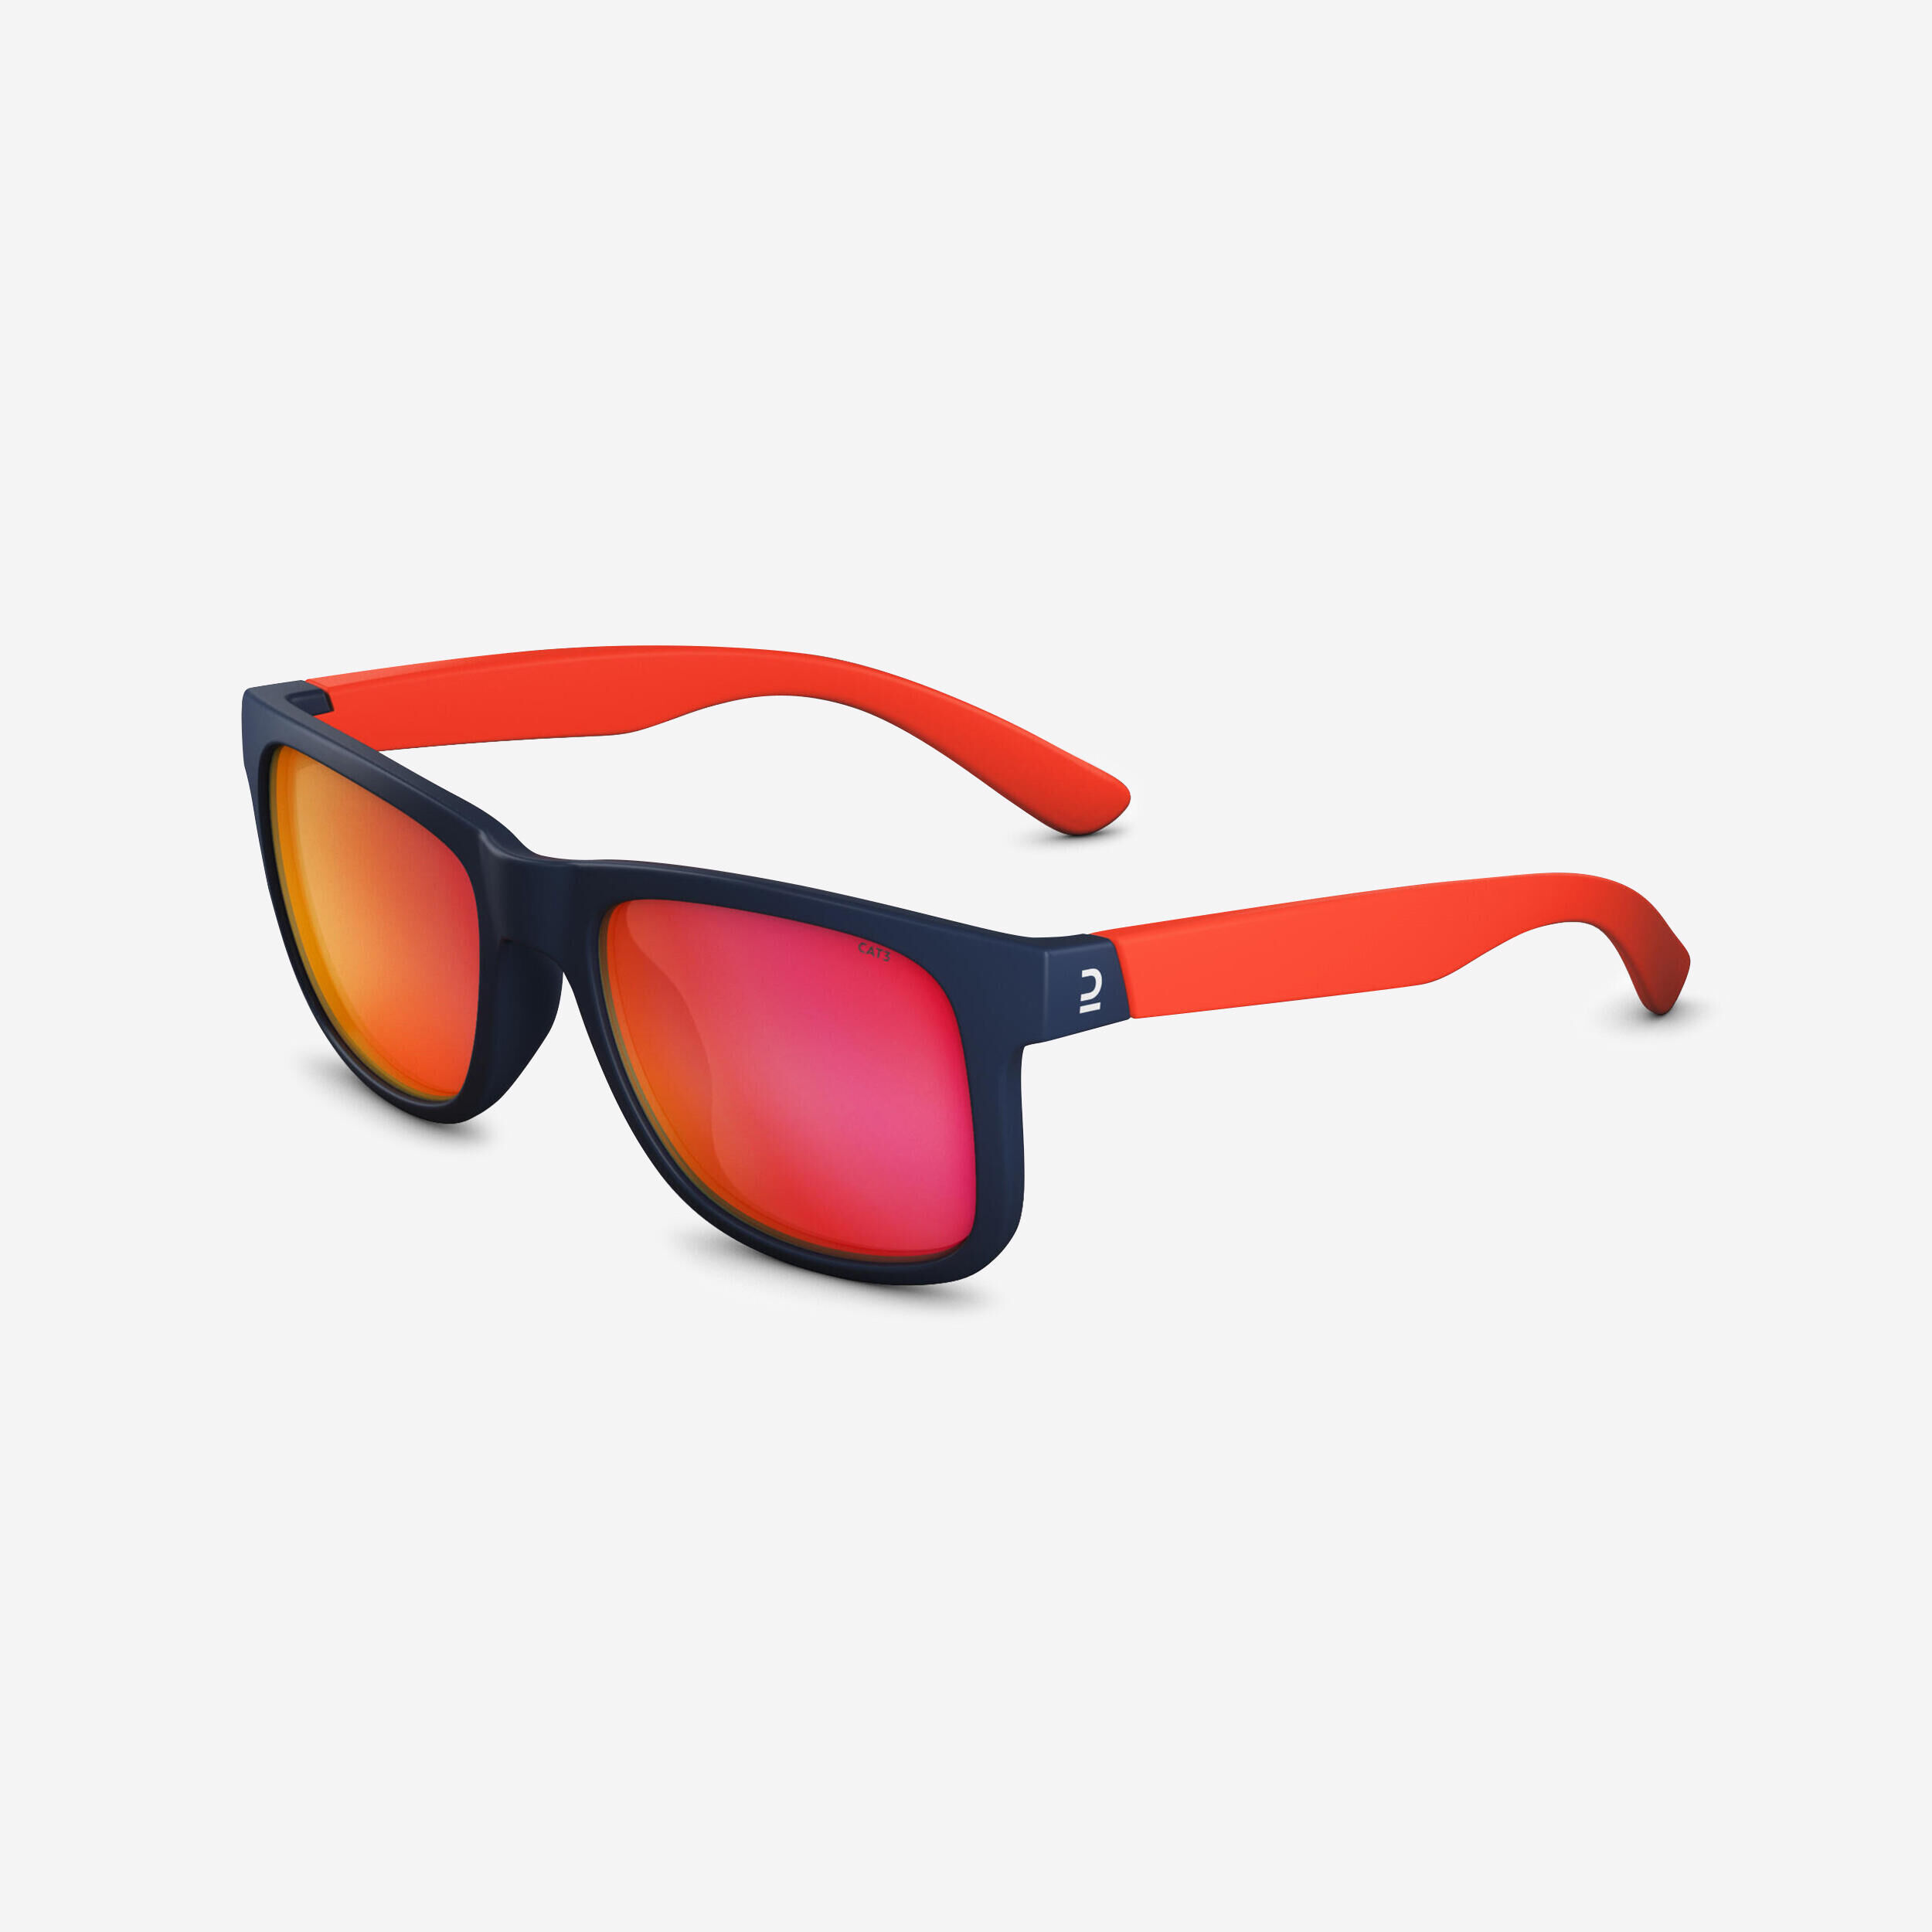 Kids' Sports Sunglasses, Polarised Sunglasses